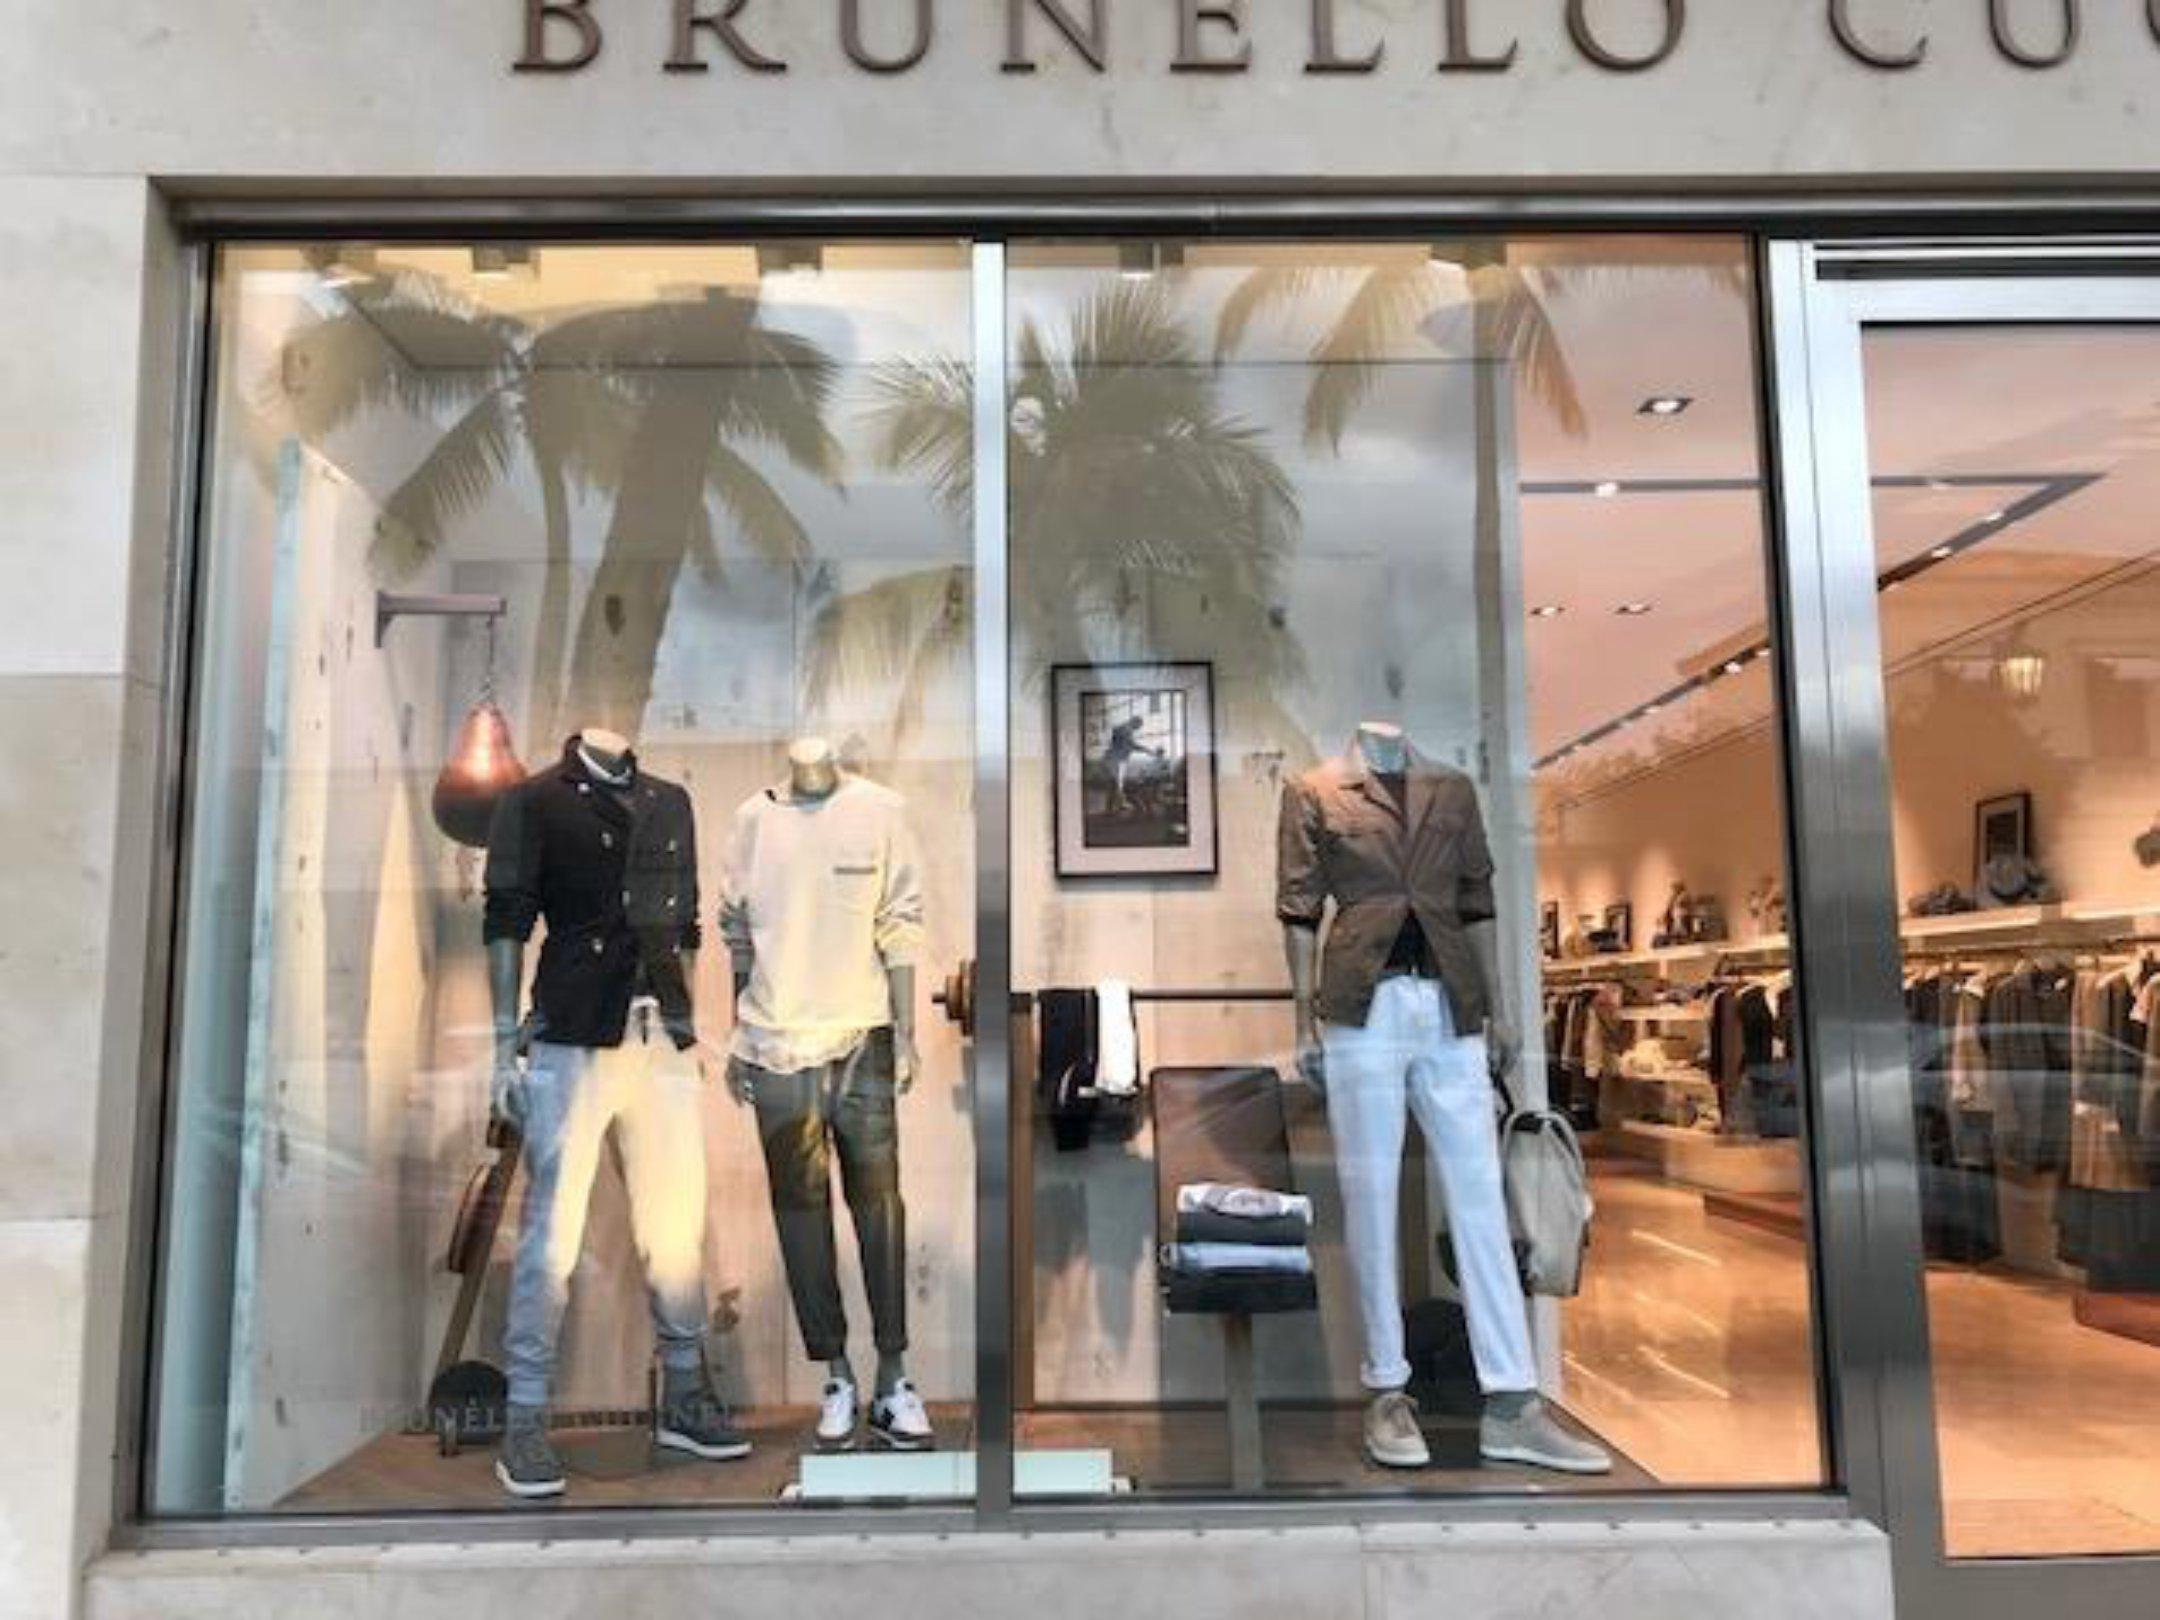 Brunello Cucinelli 3333 Bristol Street Costa Mesa, CA 92626 on 4URSPACE  retail profile